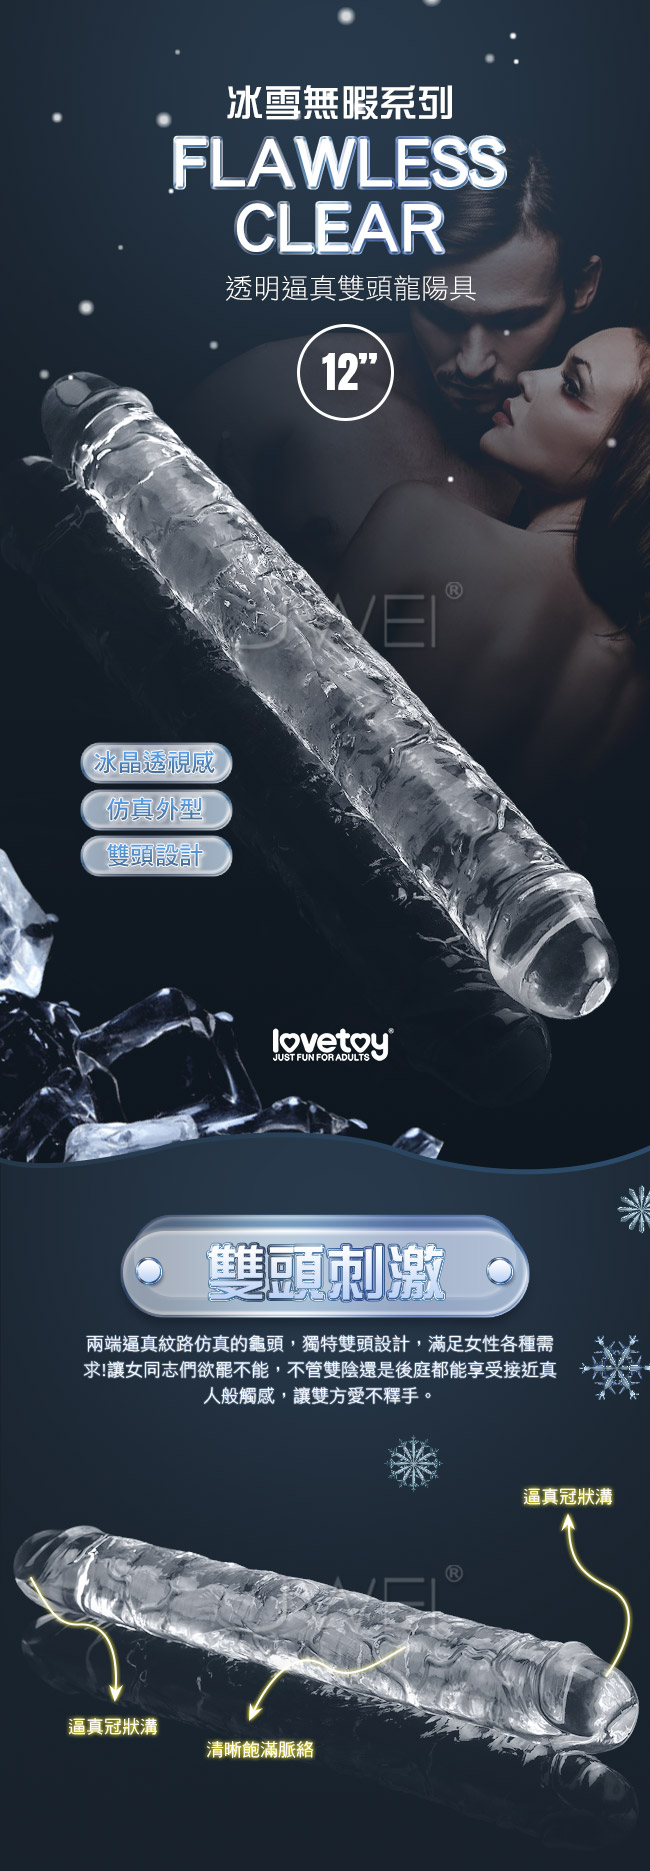 【Lovetoy原廠貨】Flawless Clear冰雪無暇系列 Double Dildo透明逼真雙頭龍按摩棒-12吋#310018